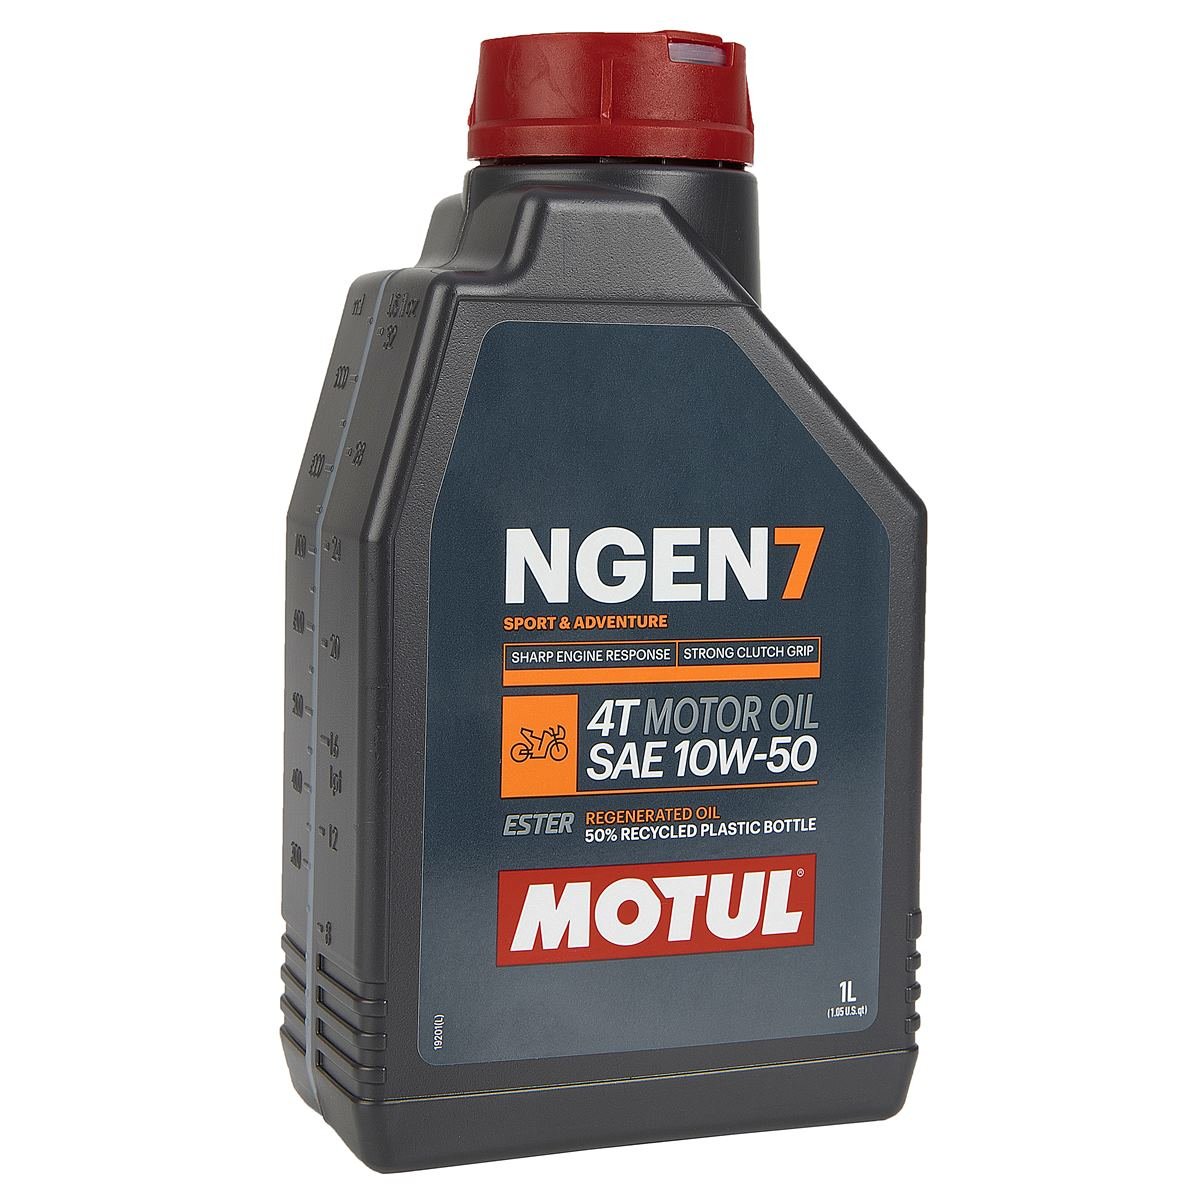 https://www.maciag-offroad.de/shop/artikelbilder/normal/157189/motul-motorenoel-motor-oil-ngen-7-1.jpg